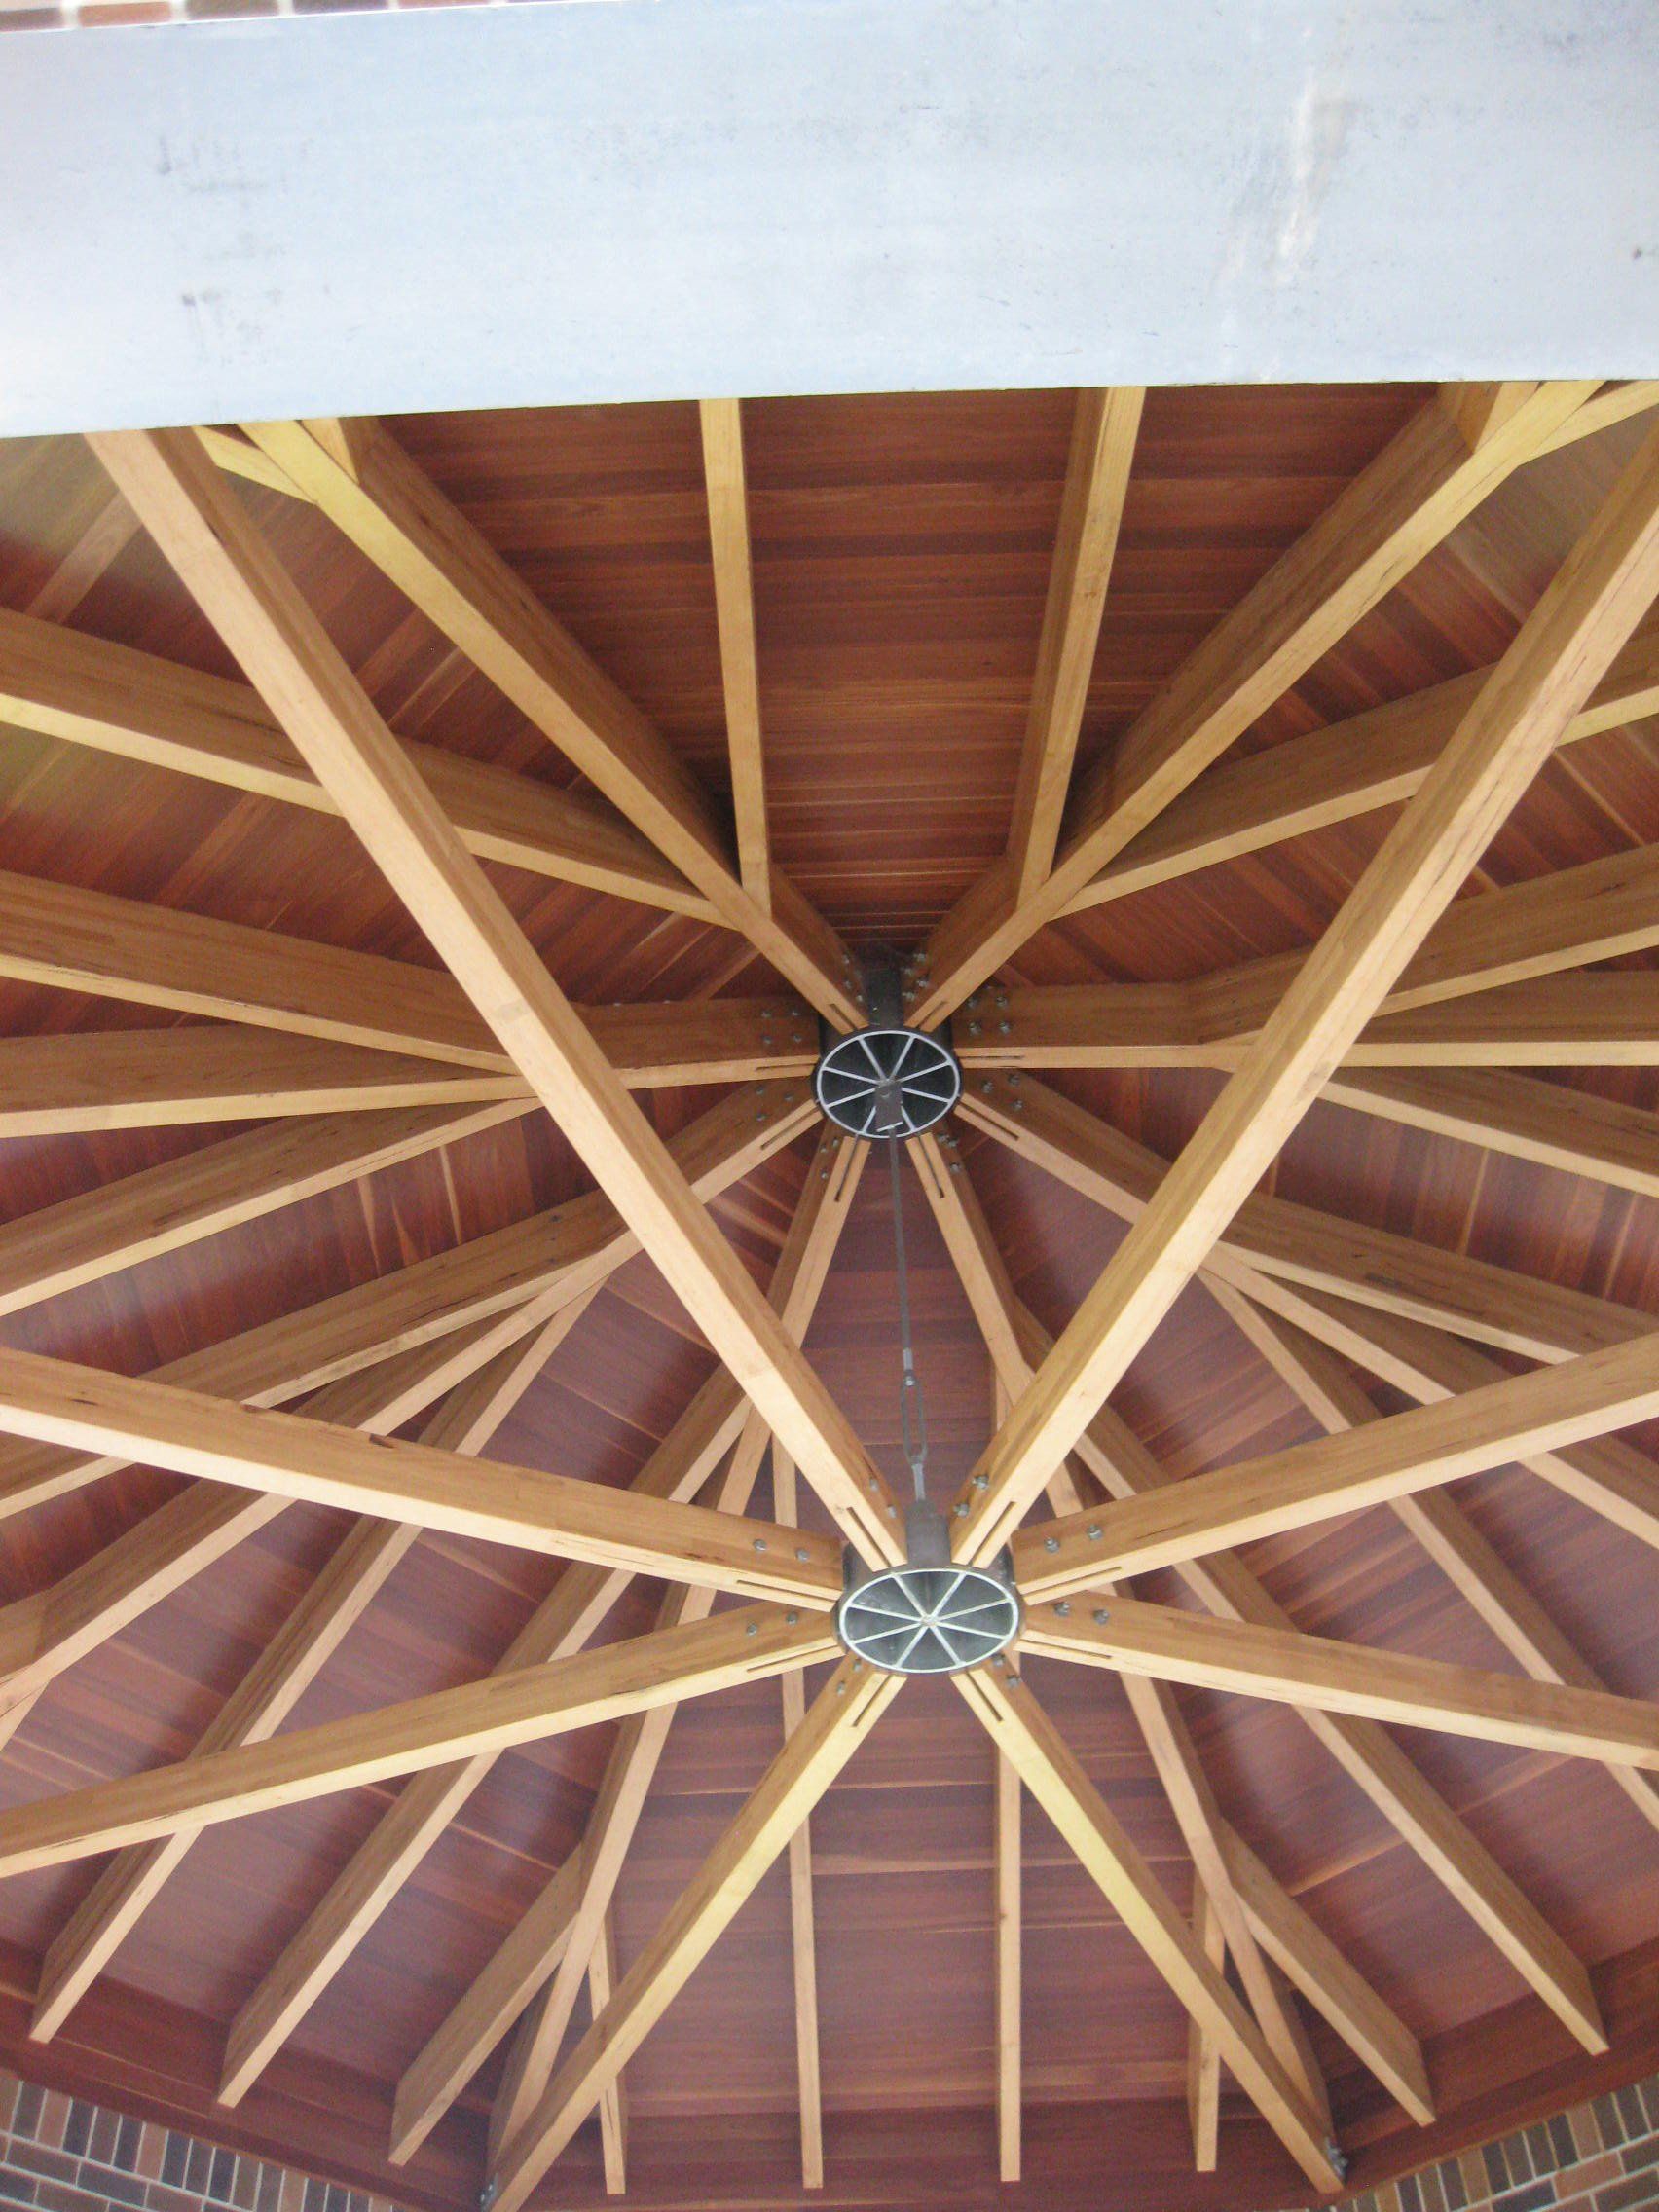 interior of gazebo roof made of wooden beams